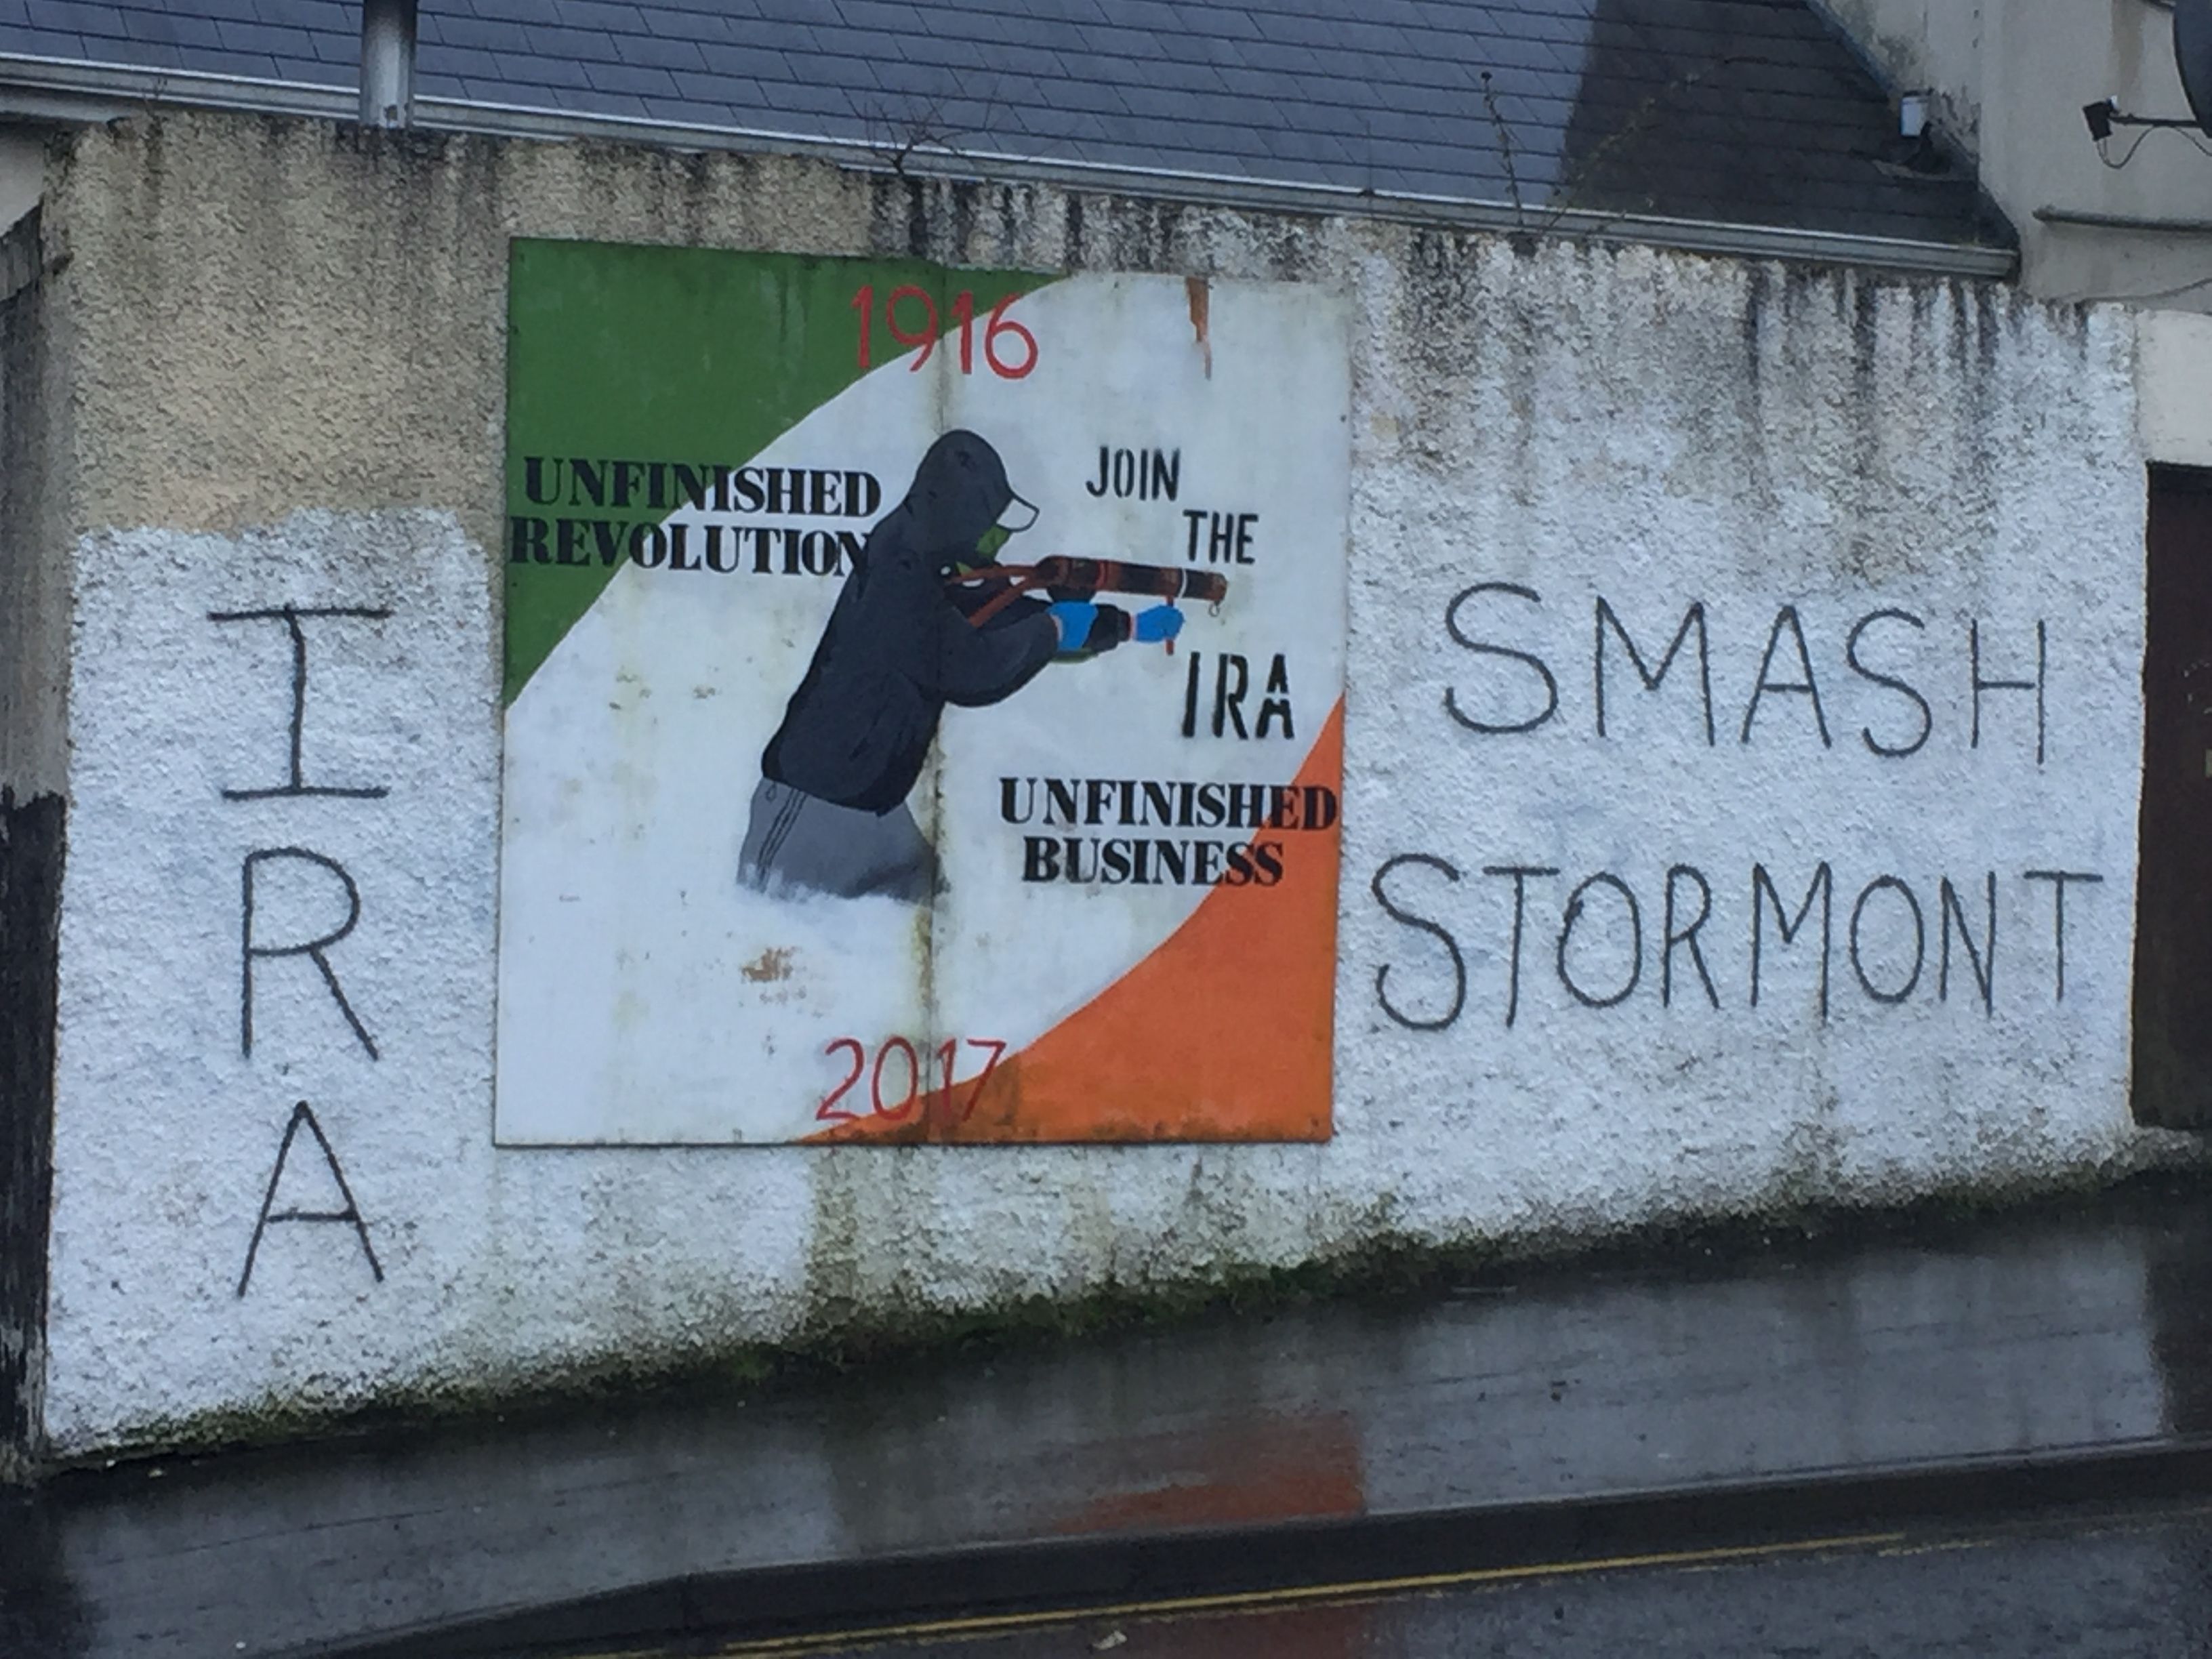 Pro-IRA graffiti in Derry's predominantly Catholic working class Bogside neighborhood. Image by Dan Haverty. United Kingdom, 2018.